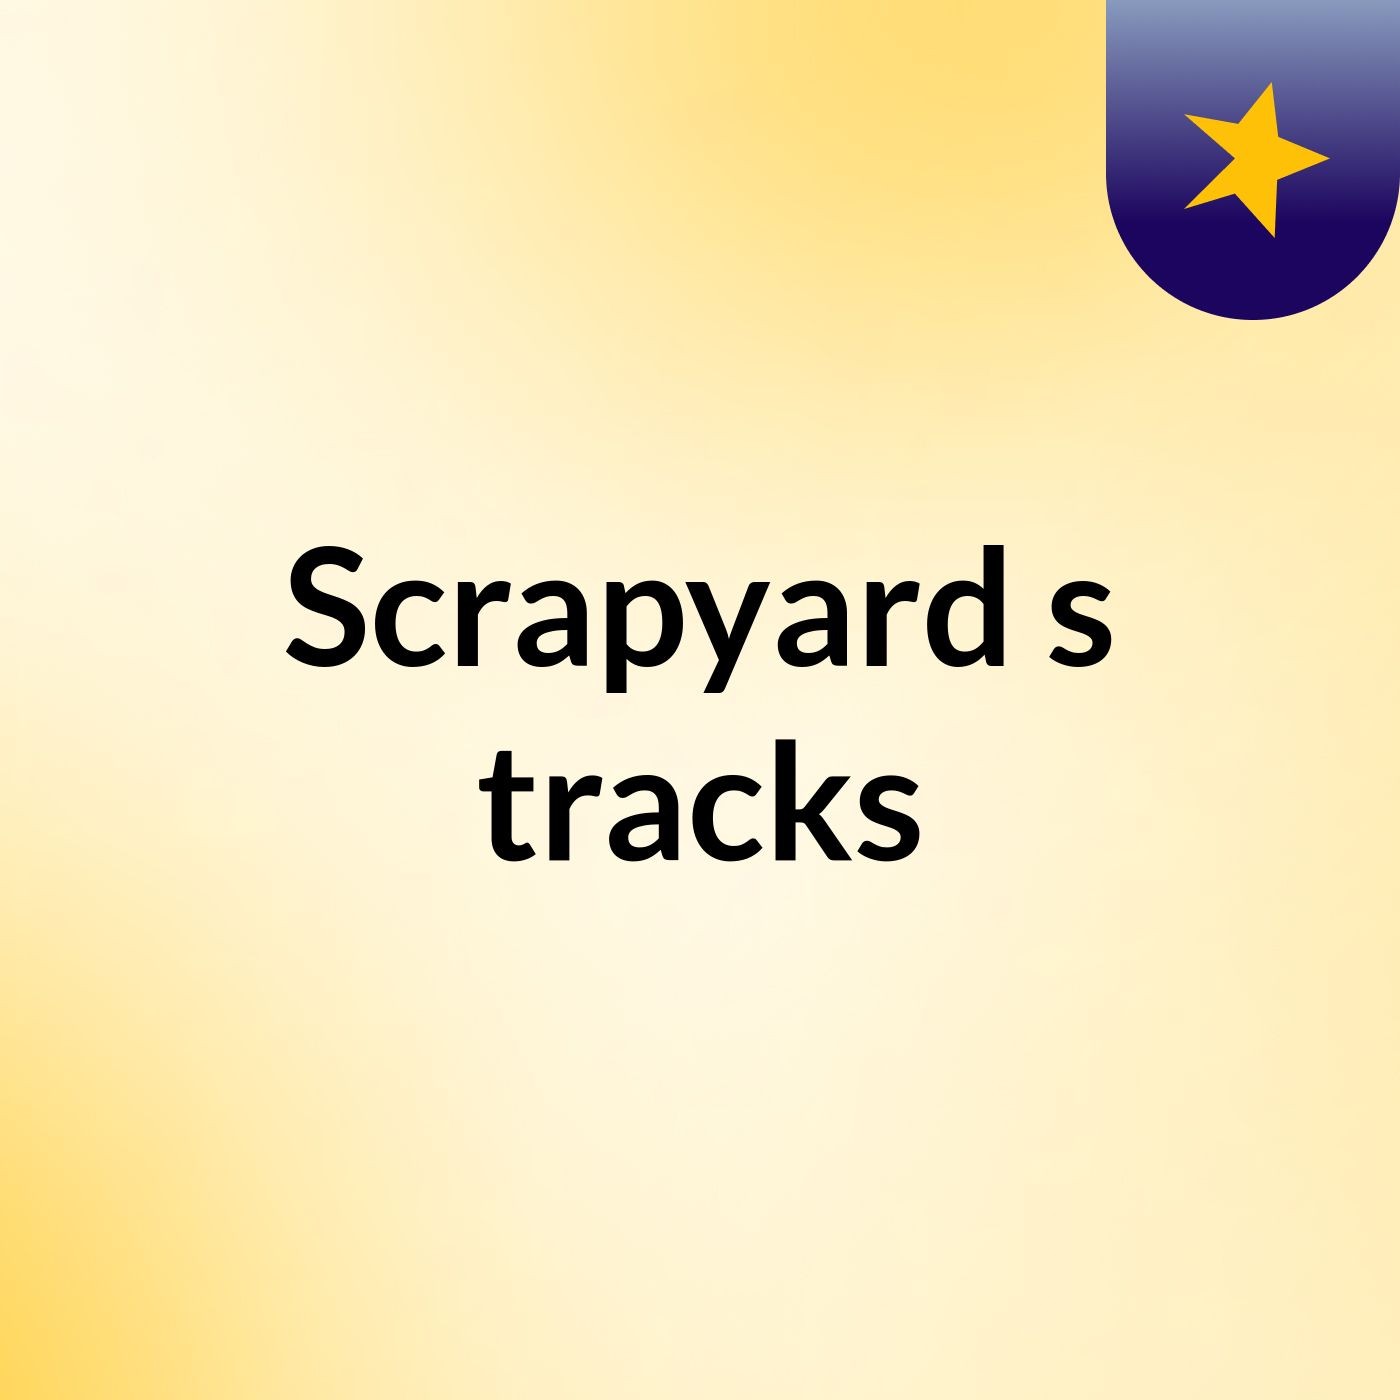 Scrapyard's tracks